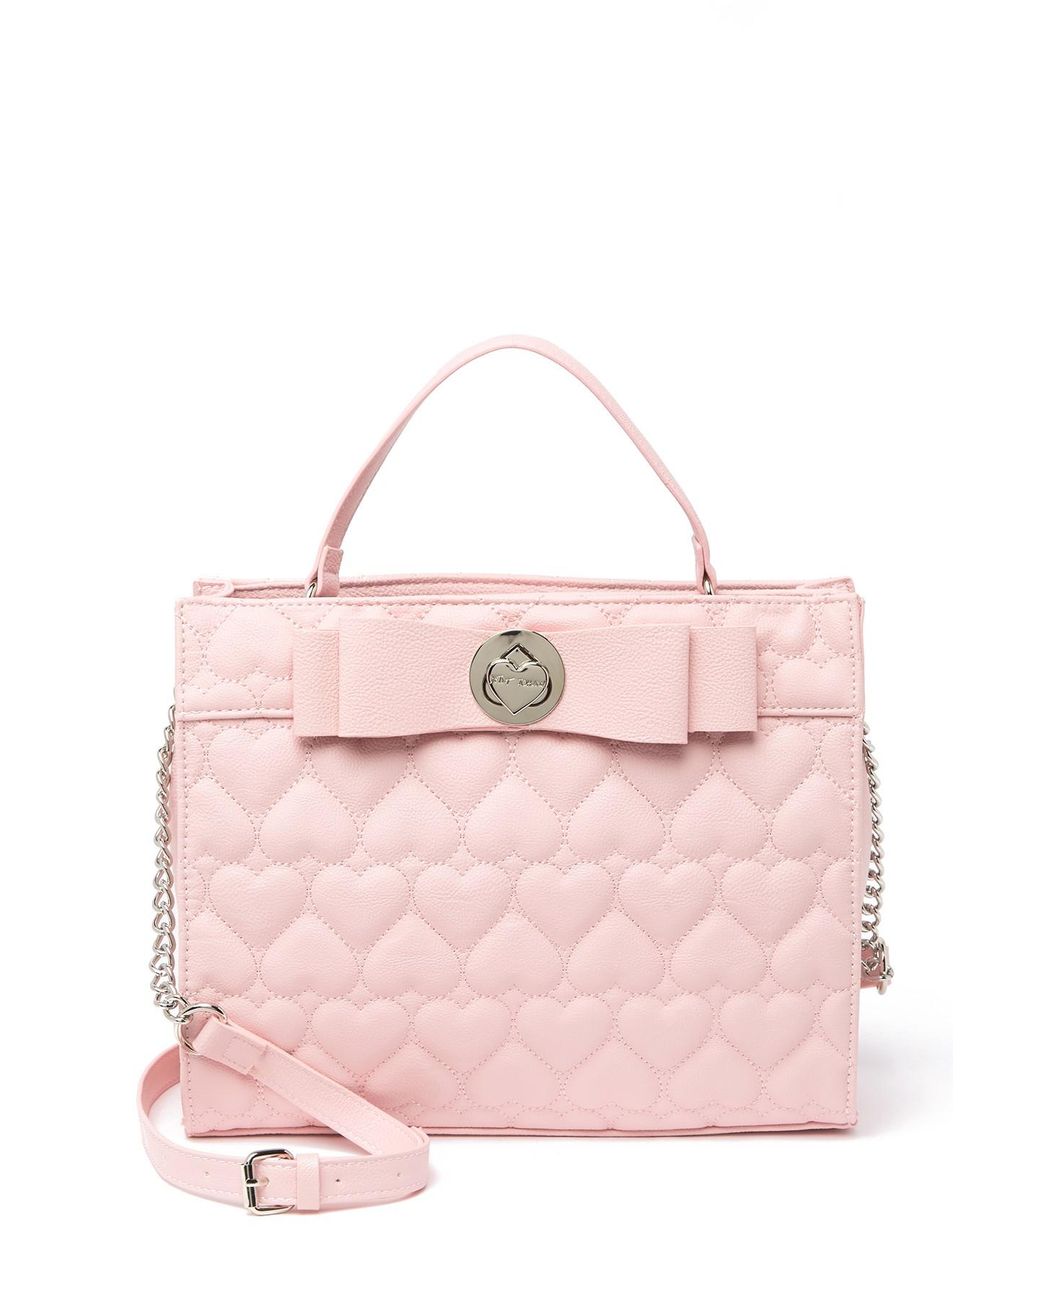 Betsy johnson hot pink purse | Betsey johnson handbags, Betsey johnson  purses, Bags